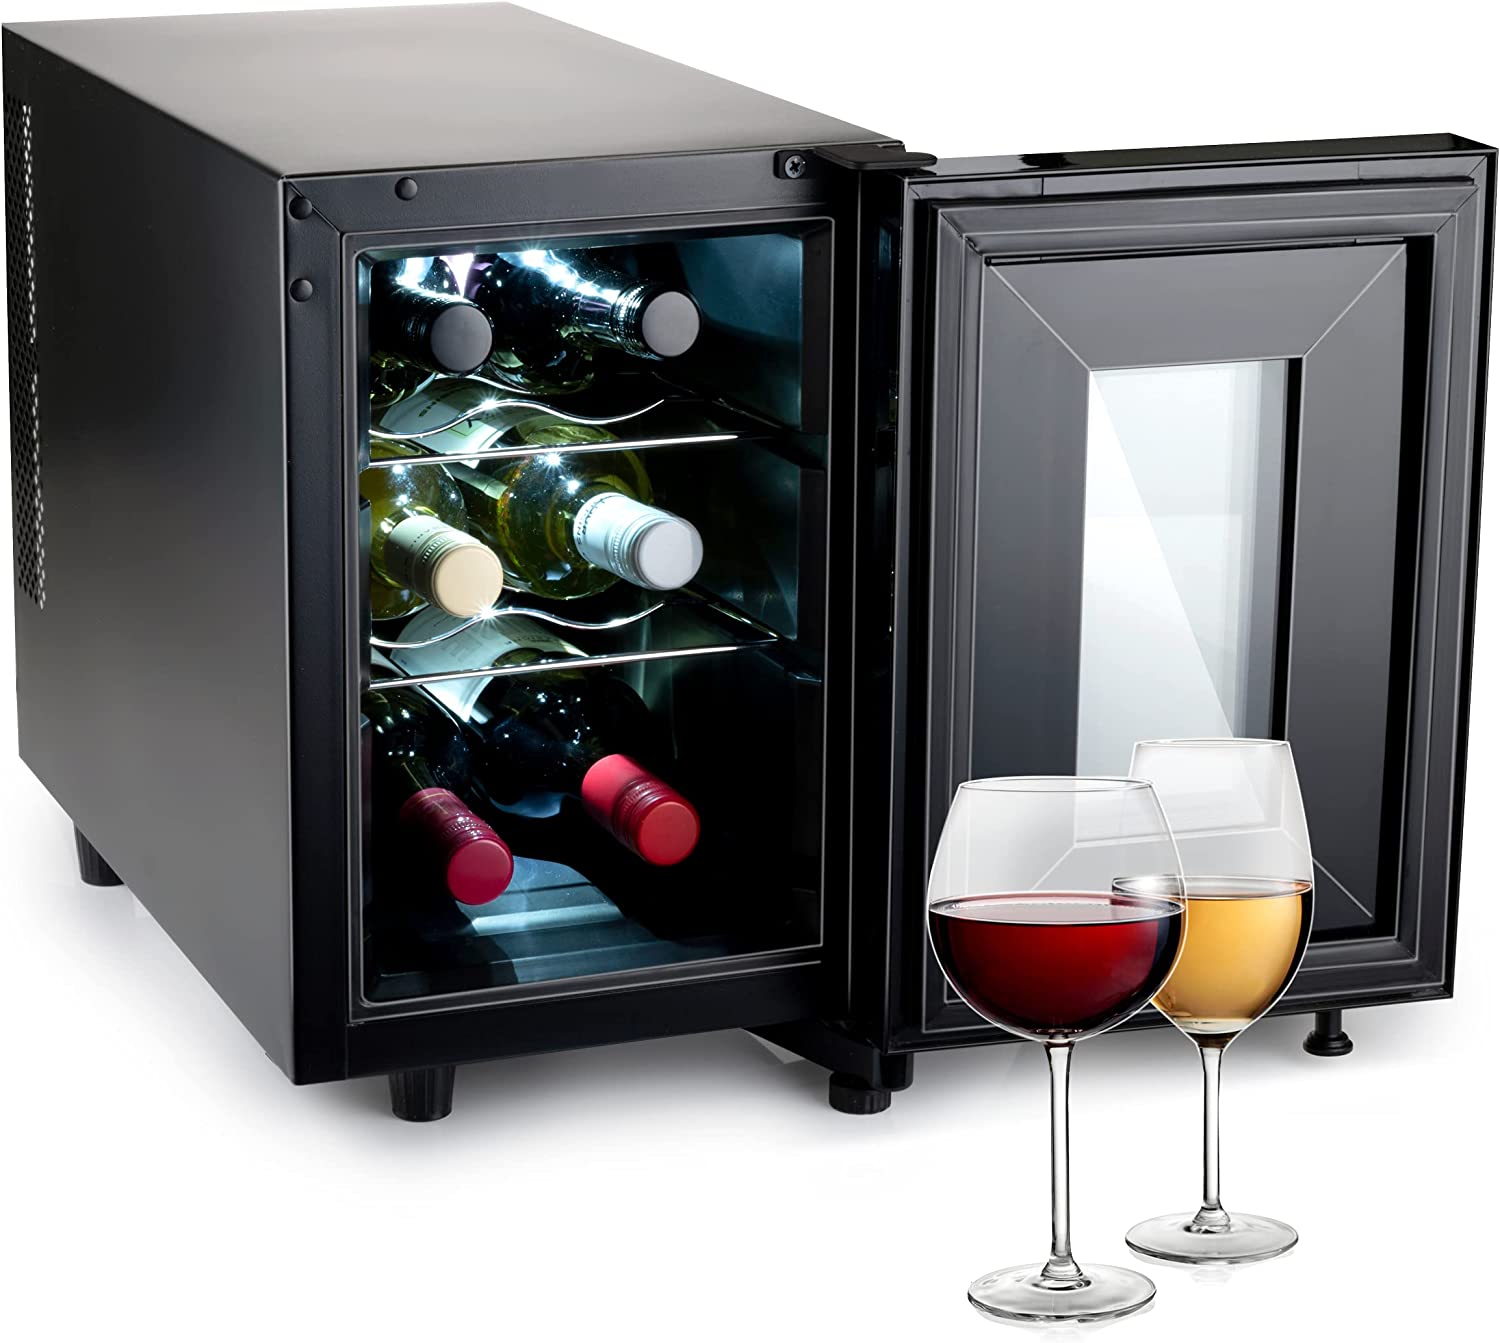 alpina Wine Fridge - 230 V - 6 Bottles / 17 L - Temperature Adjustable from 11 °C to 18 °C - Digital Display - Glass Door and Interior Lighting - Black